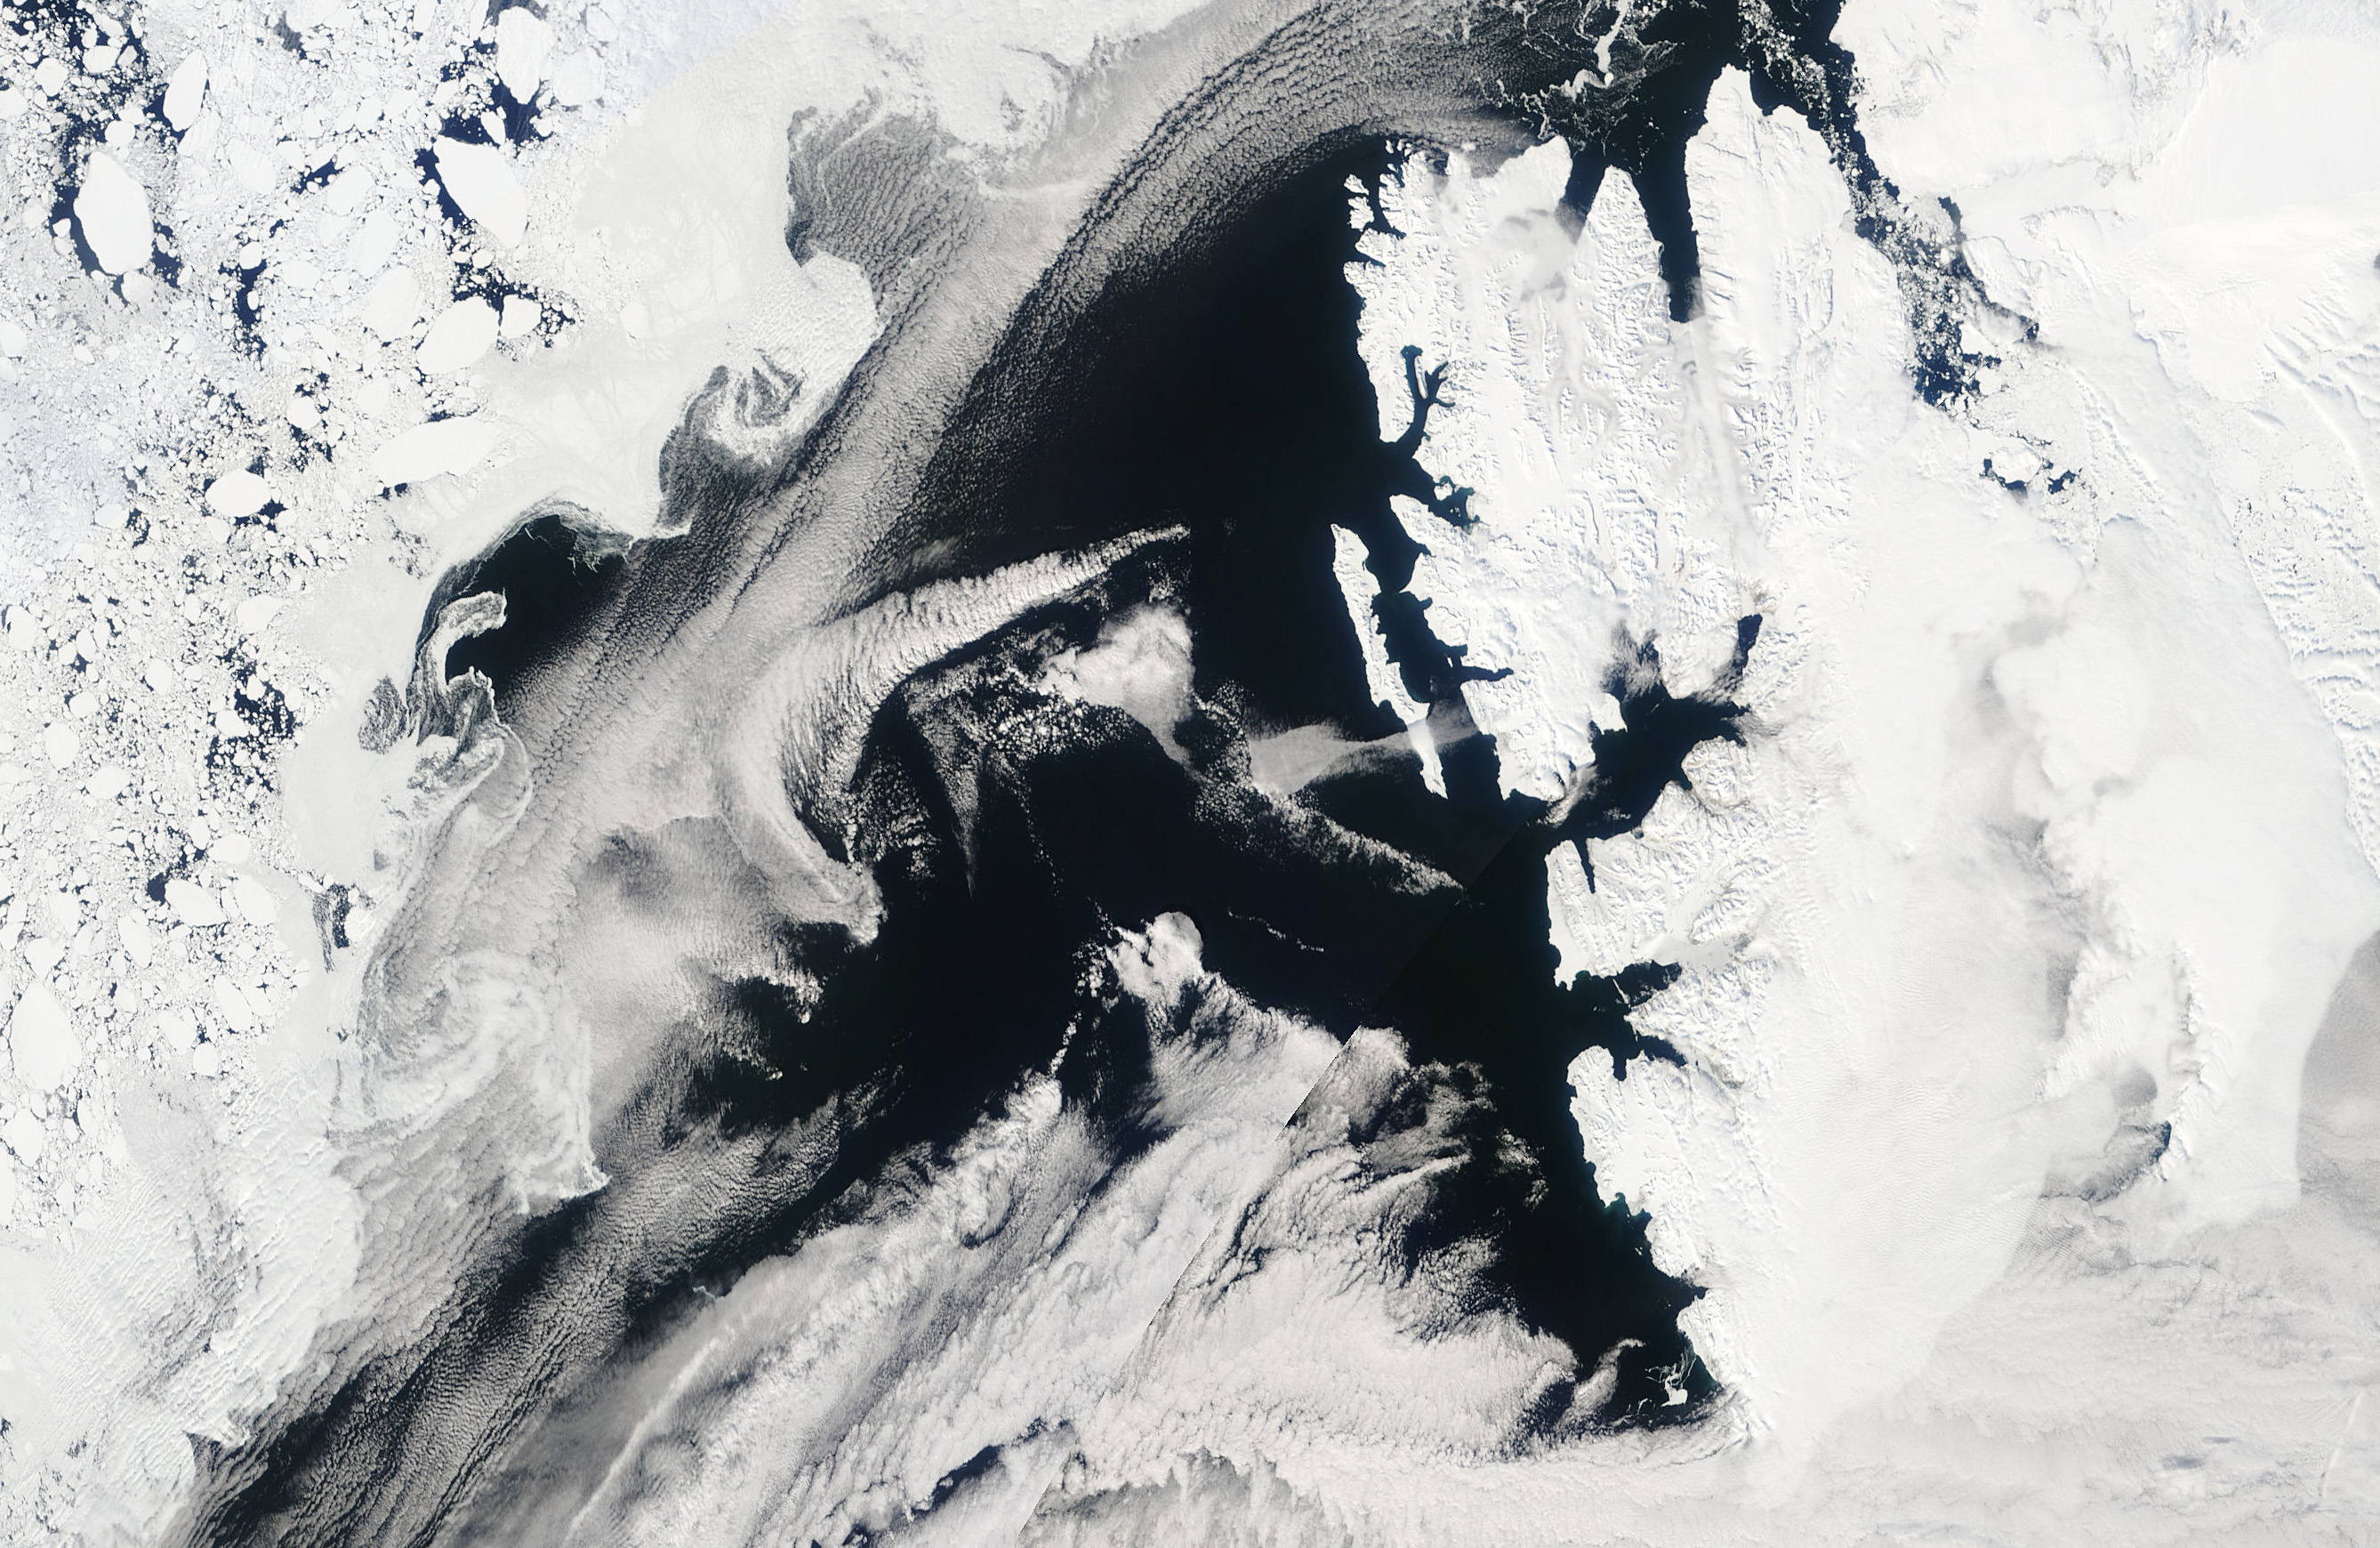 MODIS image showing the wake downstream of Svalbard on May 23 2007 (source: EOSDIS NASA)